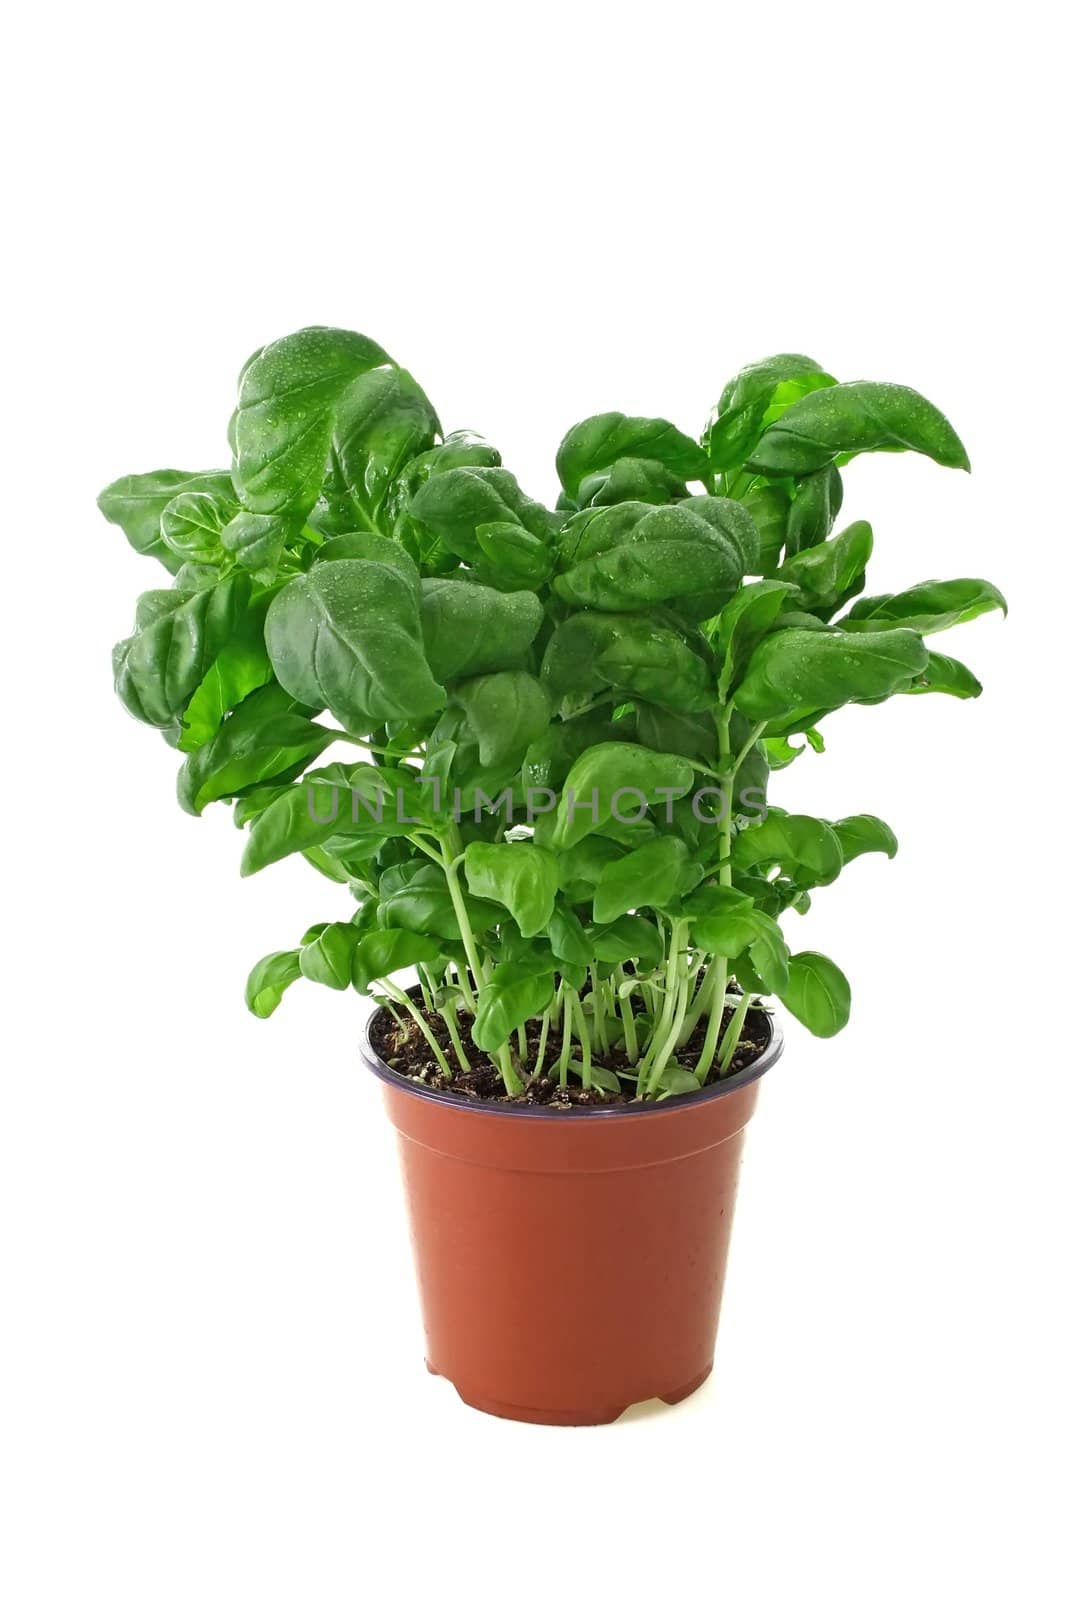 Basil plant by Teamarbeit